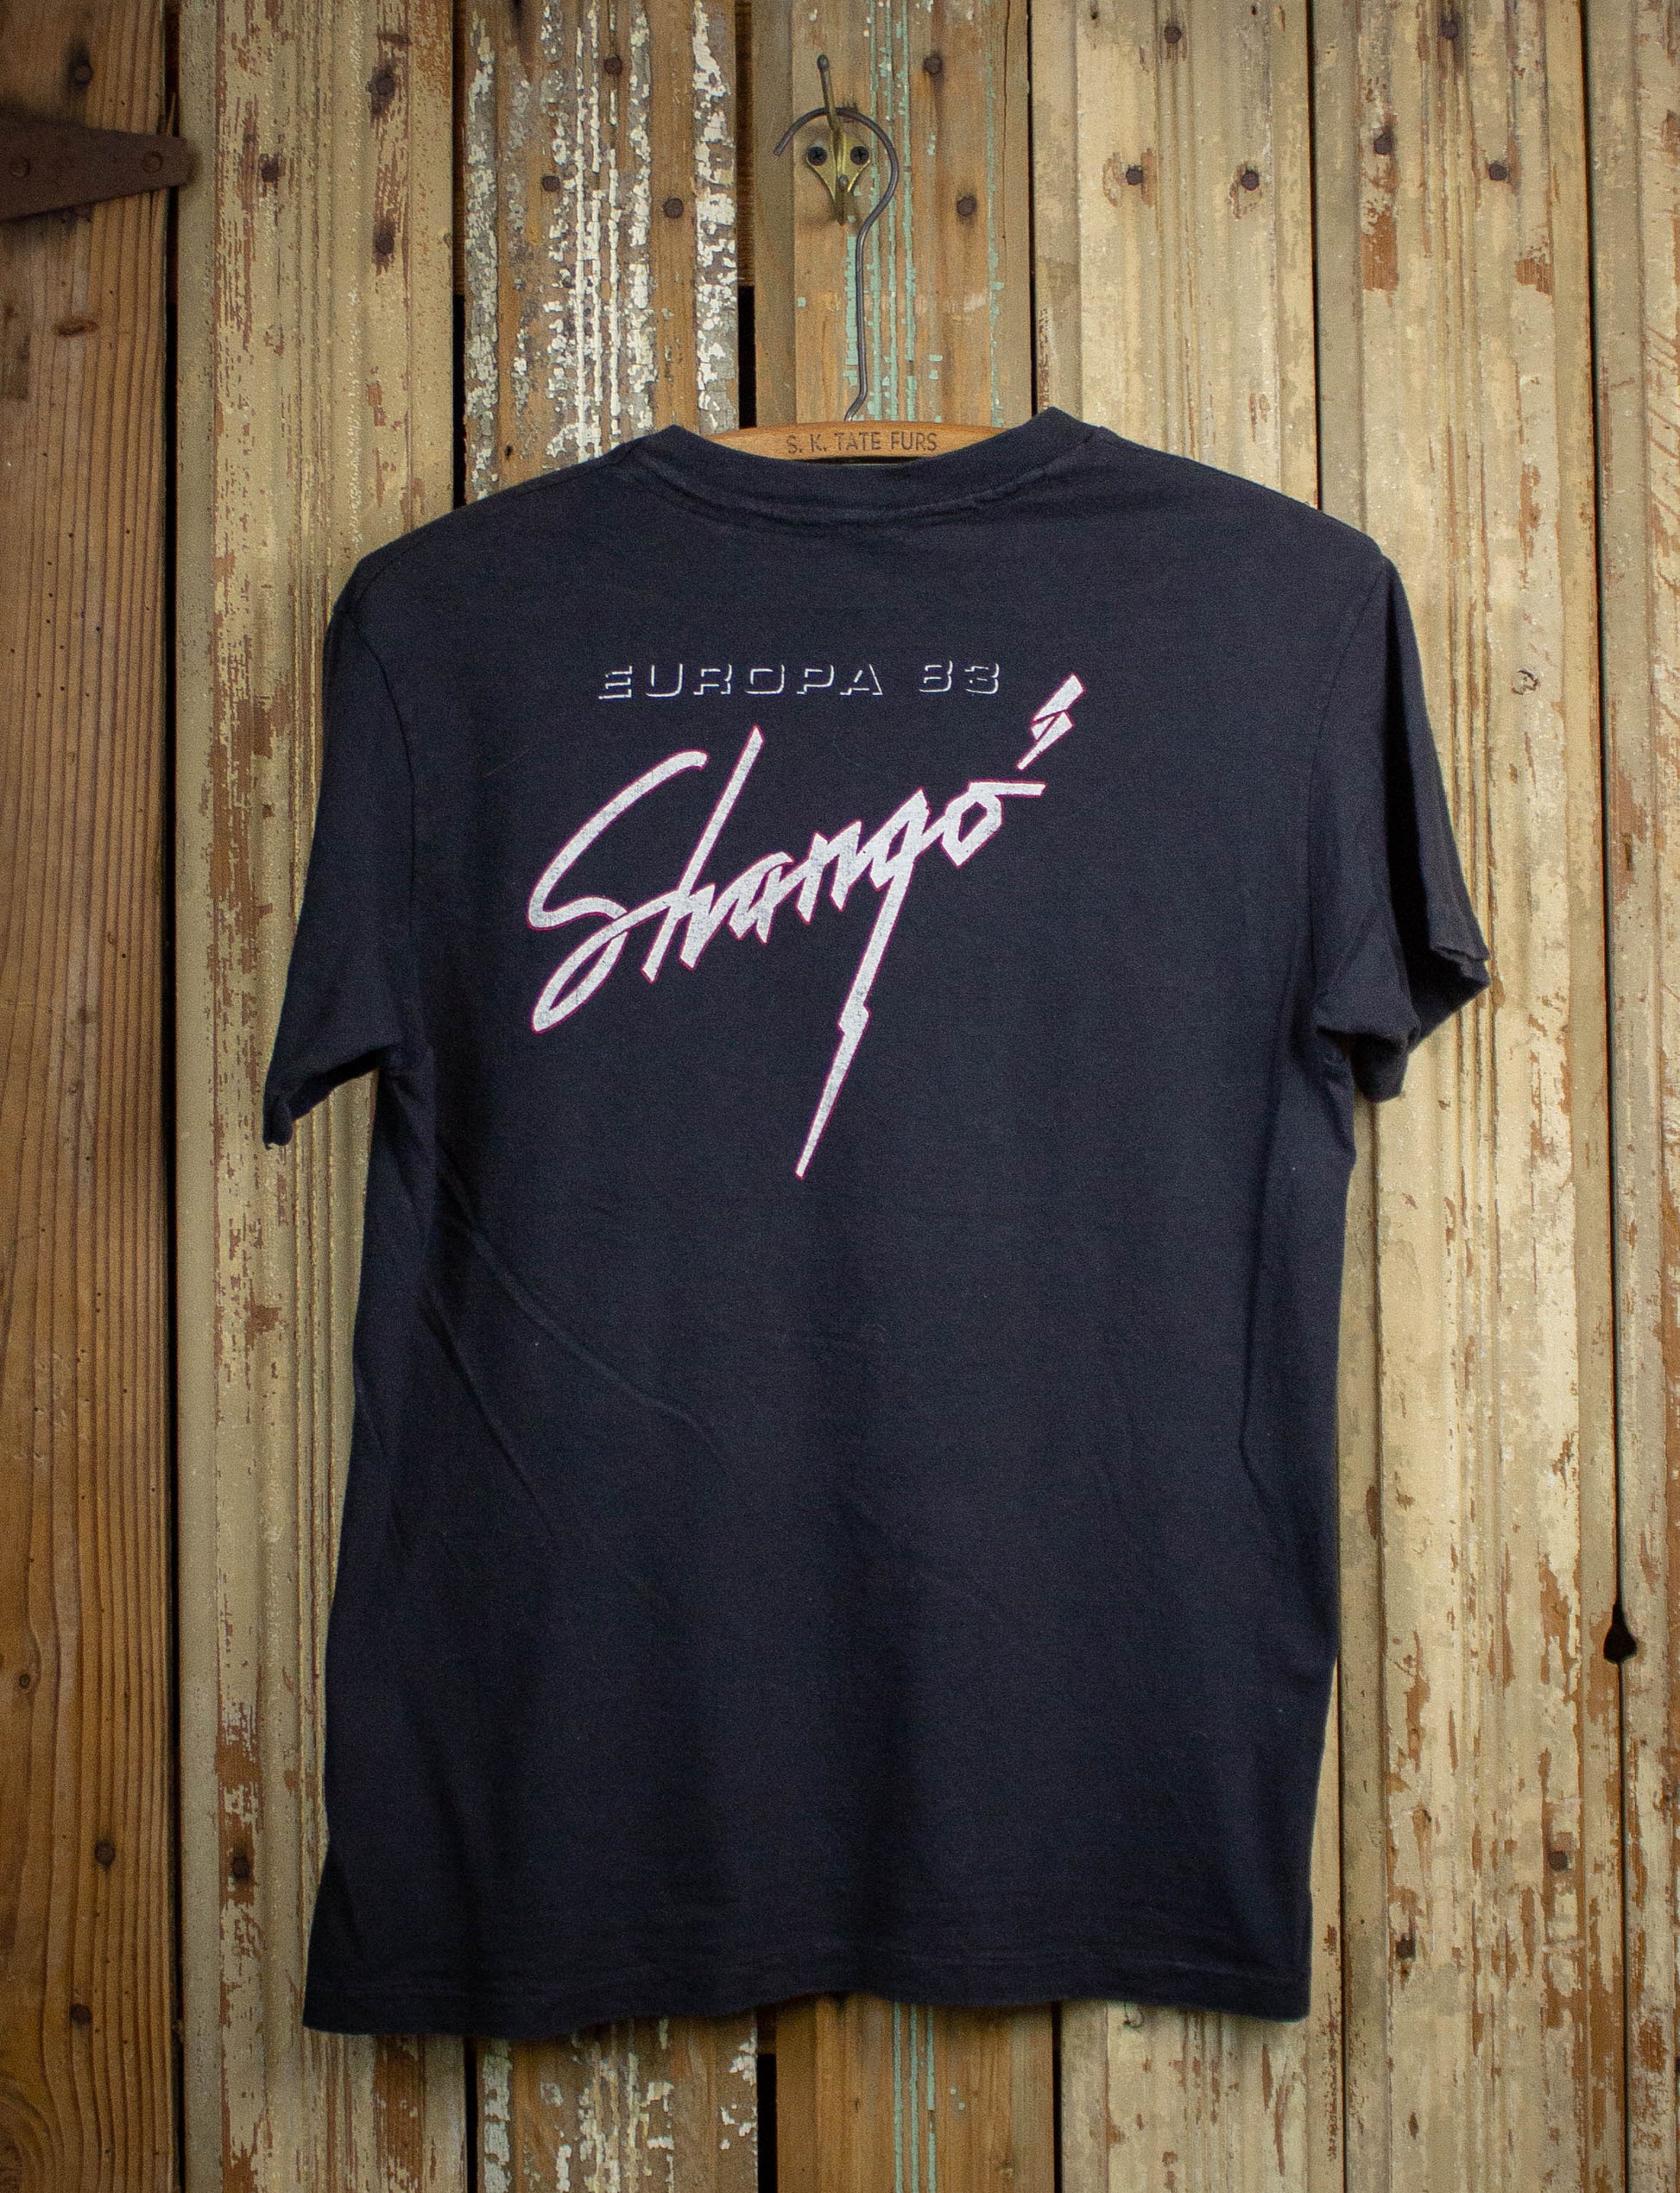 Vintage Santana Shango European Tour Concert T Shirt 1983 Black Small